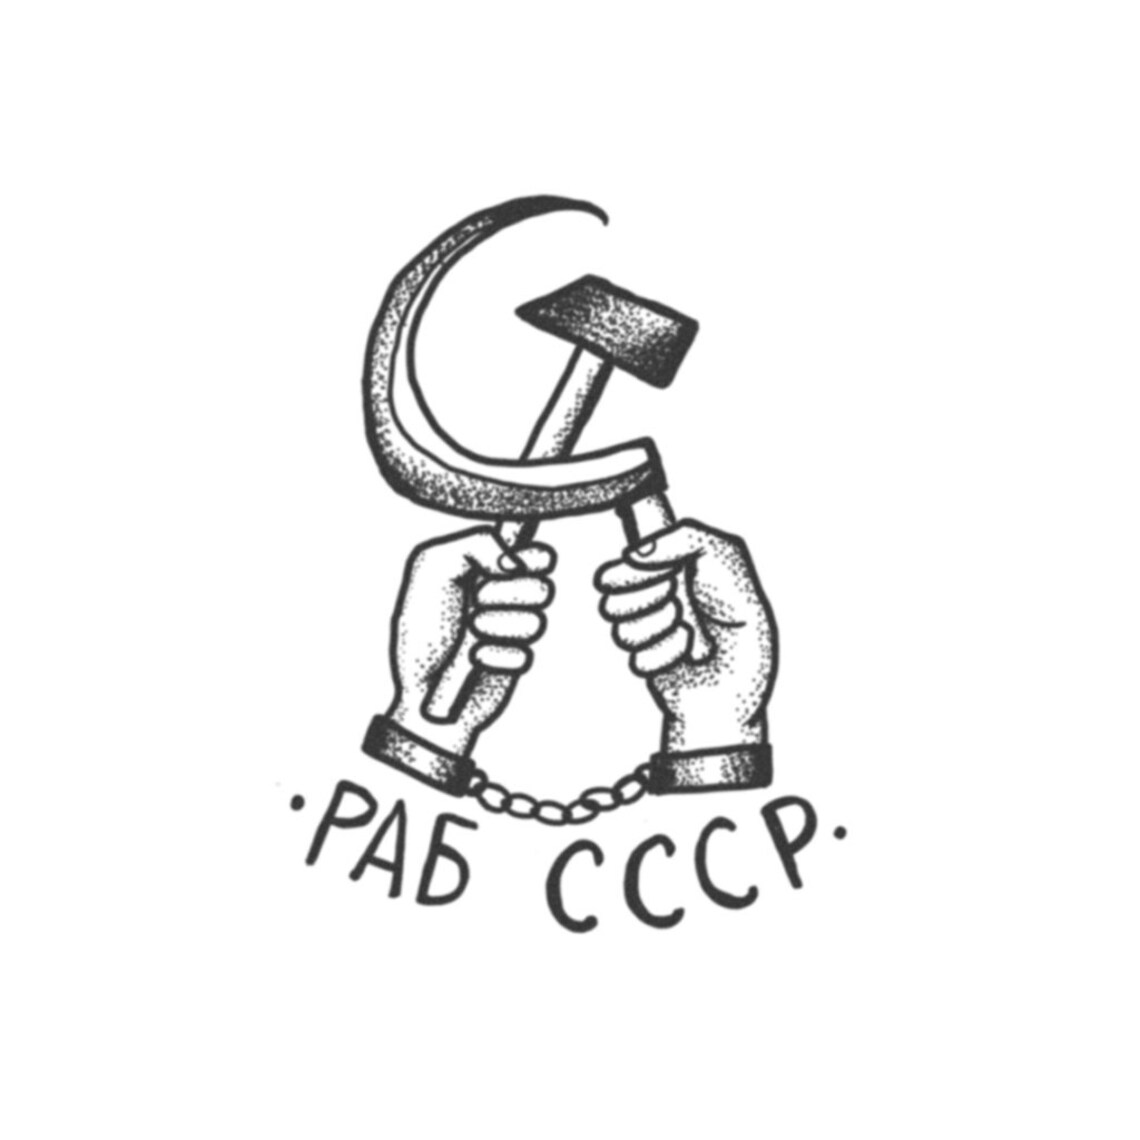 Esclavo del tatuaje de la URSS tatuaje de martillo y hoz